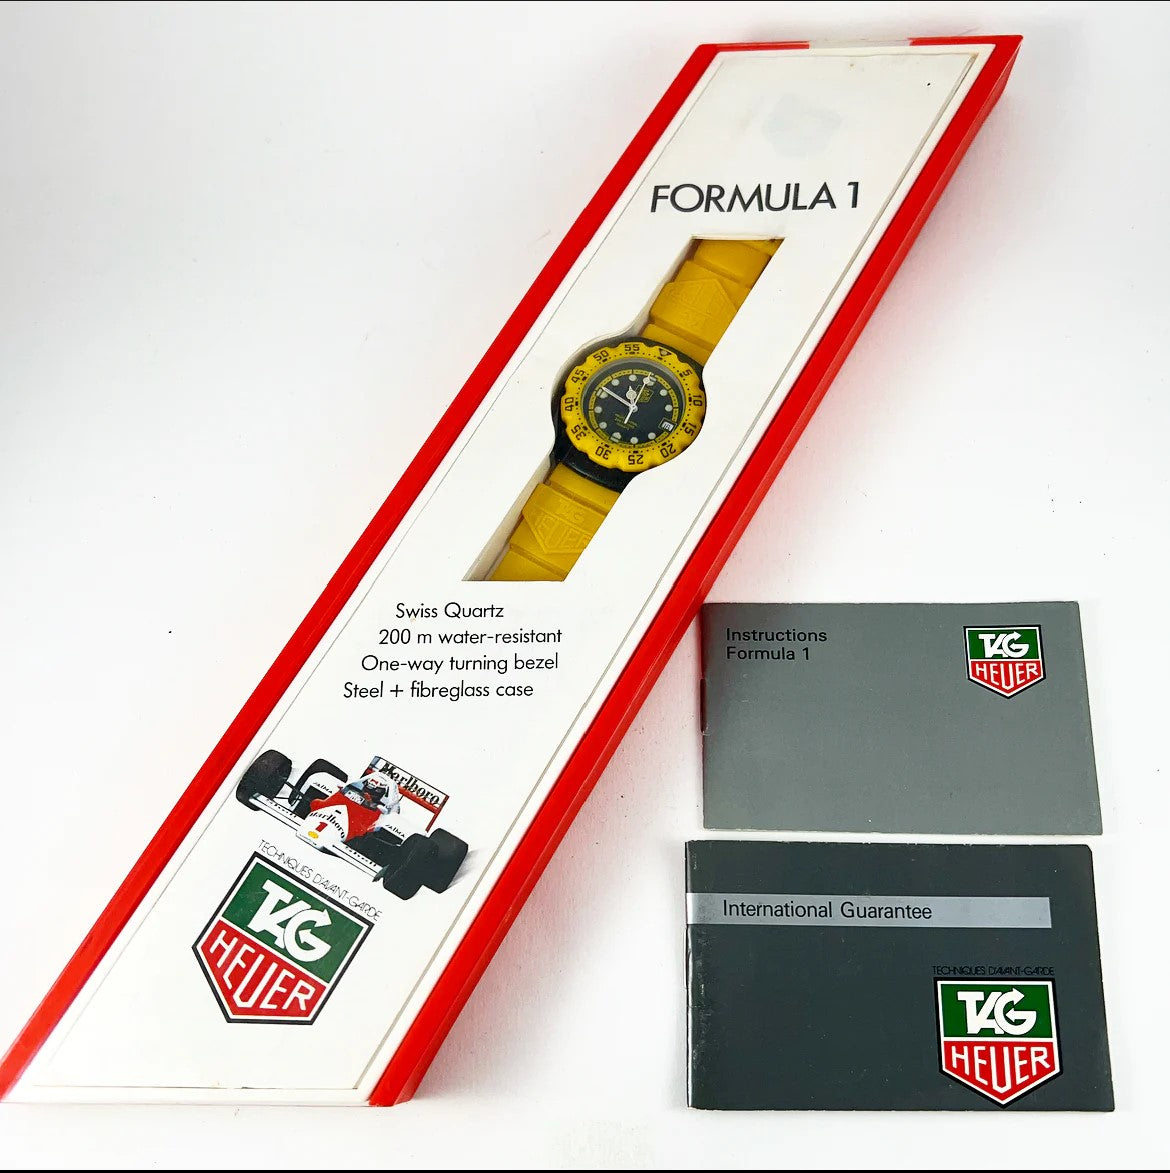 10_Watches_That_Perfectly_Pair_with_McLaren_s_Ayrton_Senna_Monaco_Livery_1980_Tag_Senna